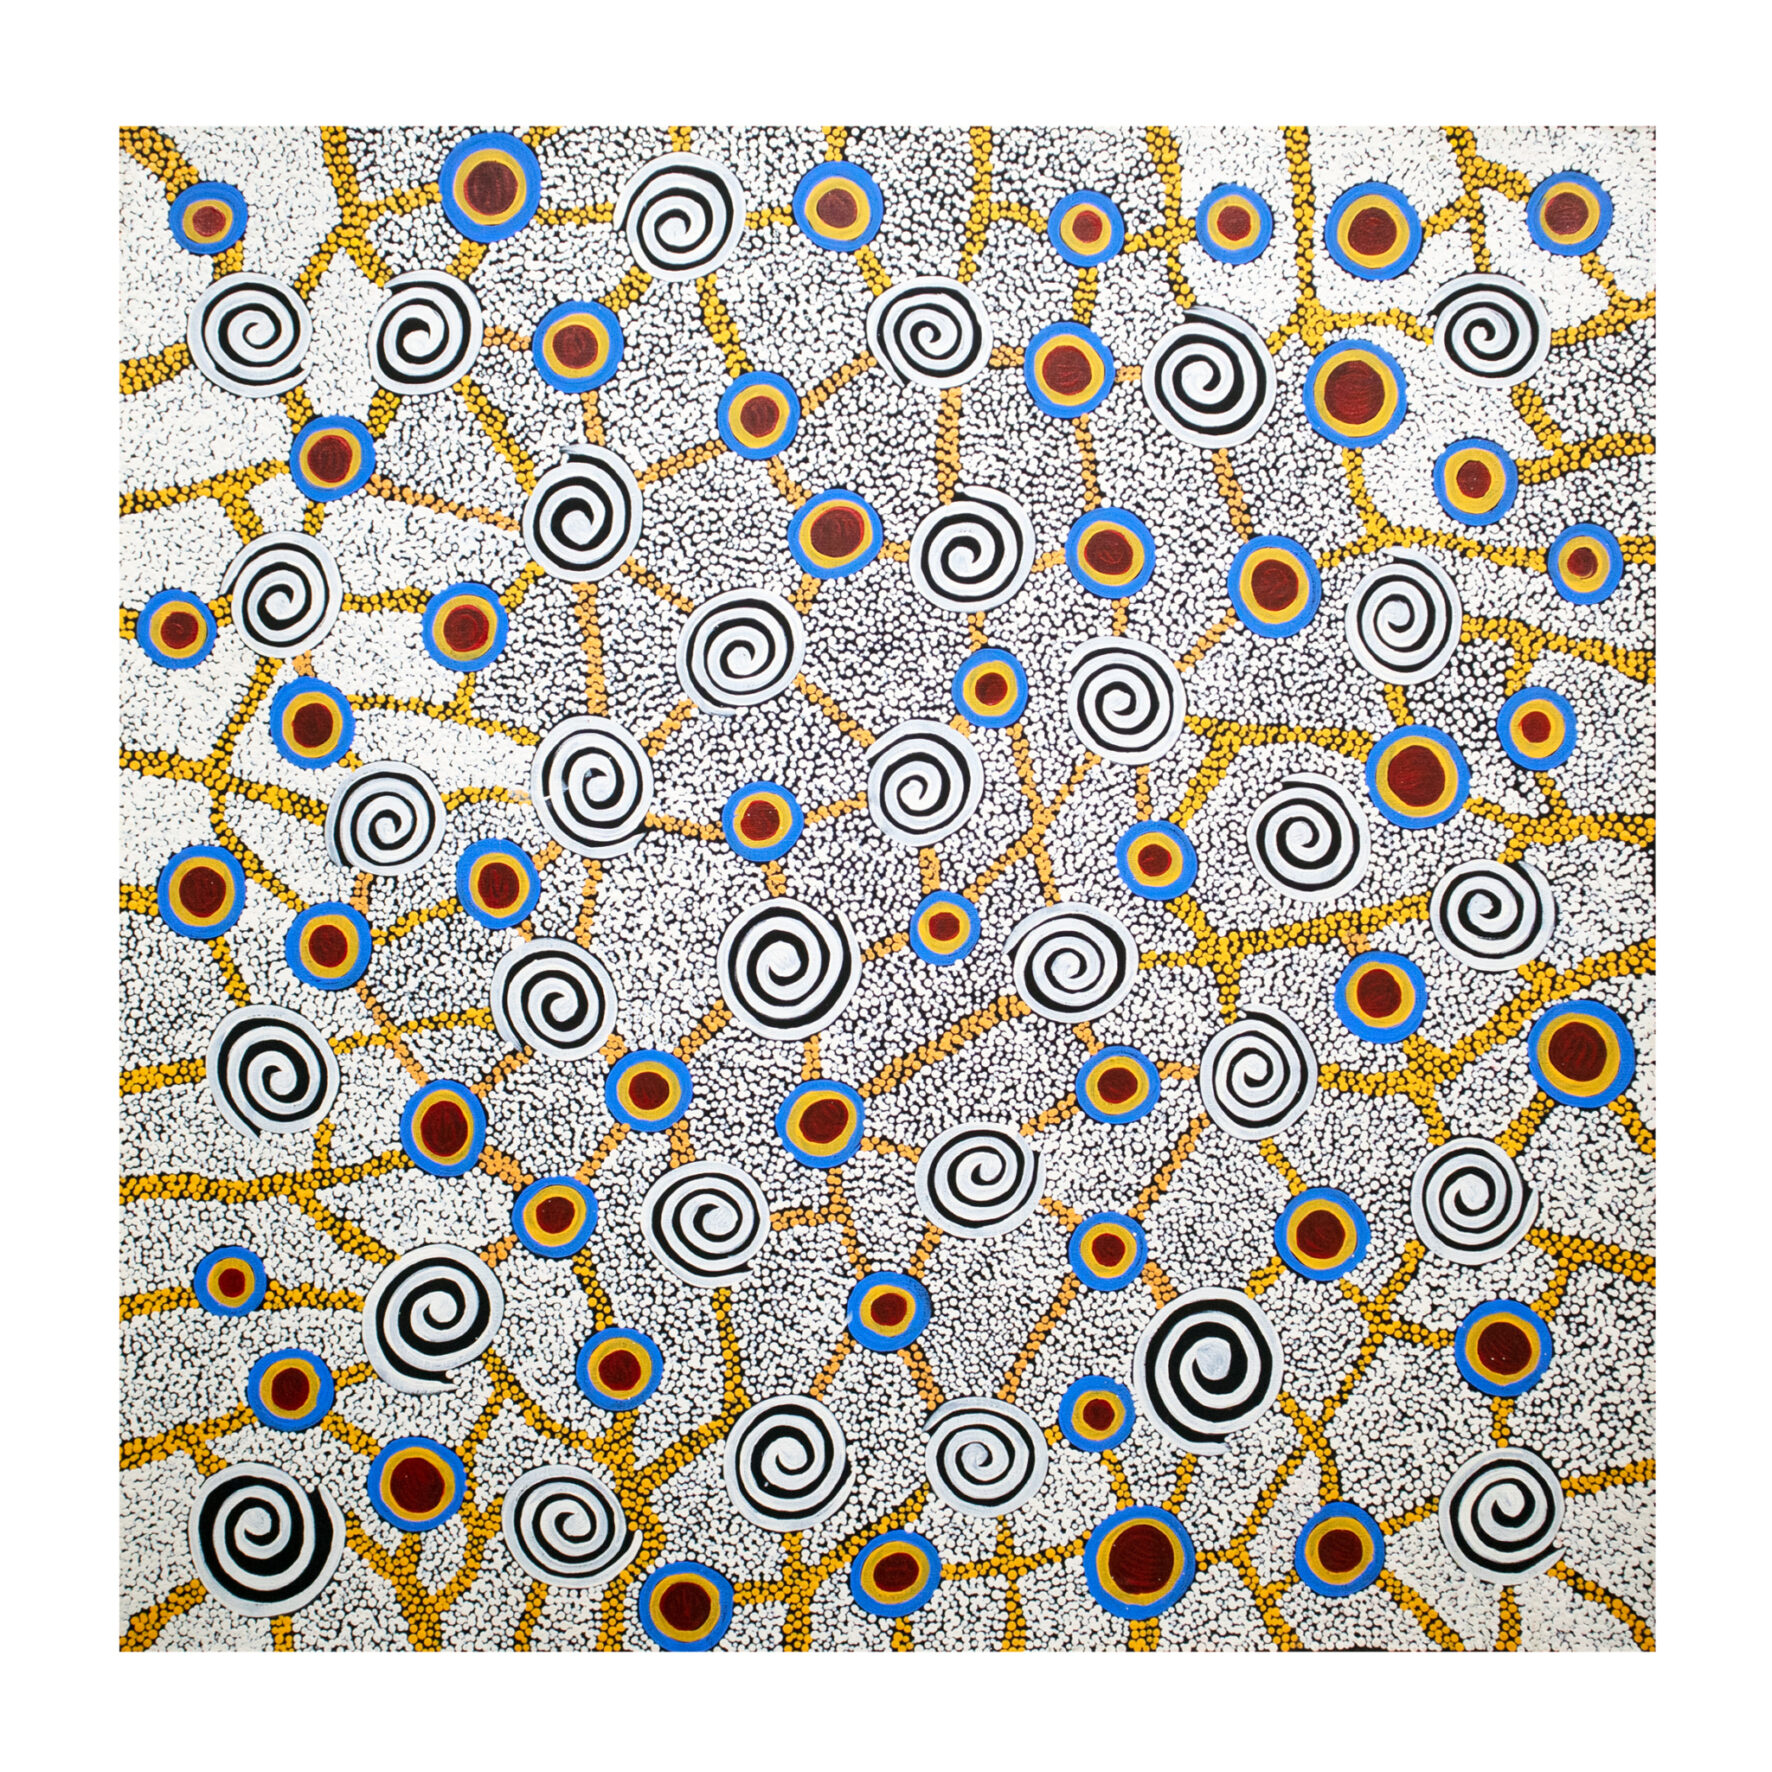 Freda Teamay: Kunata (Hail Stones), 2019 (X2001-19). Freda Teamay is an emerging artist from the Central Desert Mutitjulu Community in the Uluru-Katajuta National Park NT